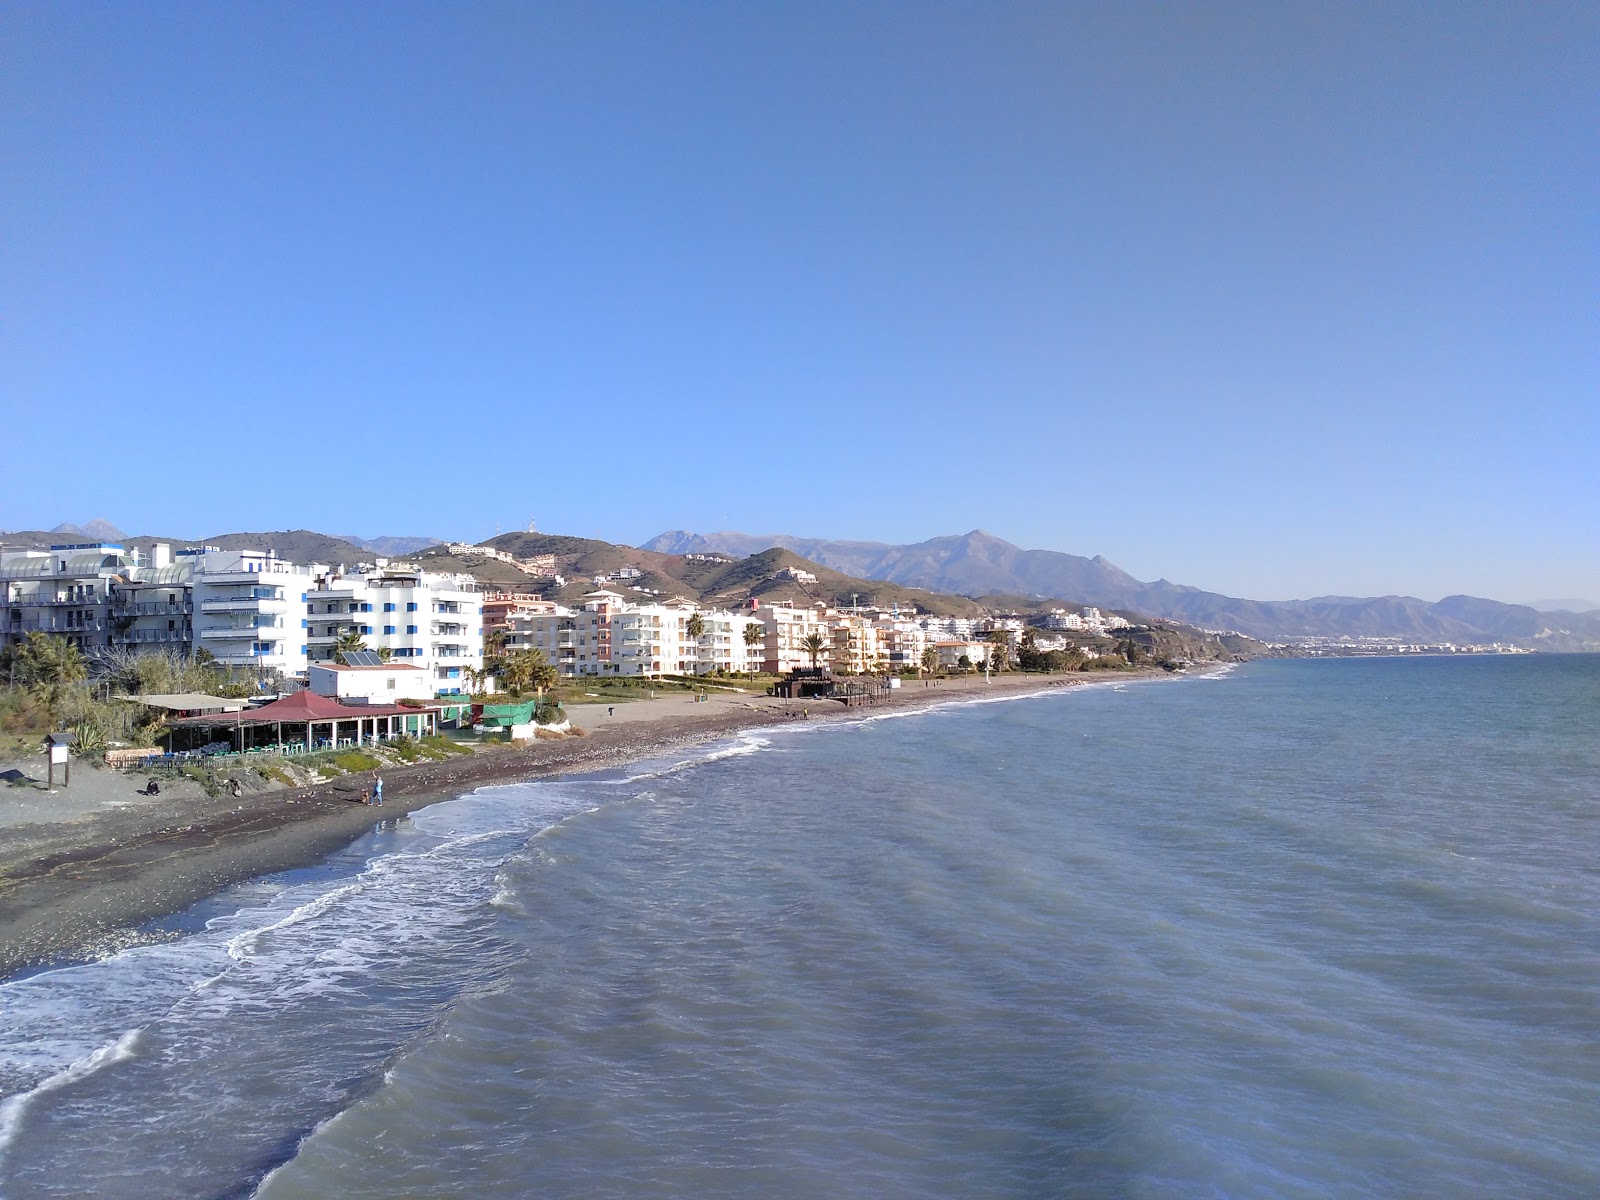 Foto de Playa el Penoncillo com alto nível de limpeza